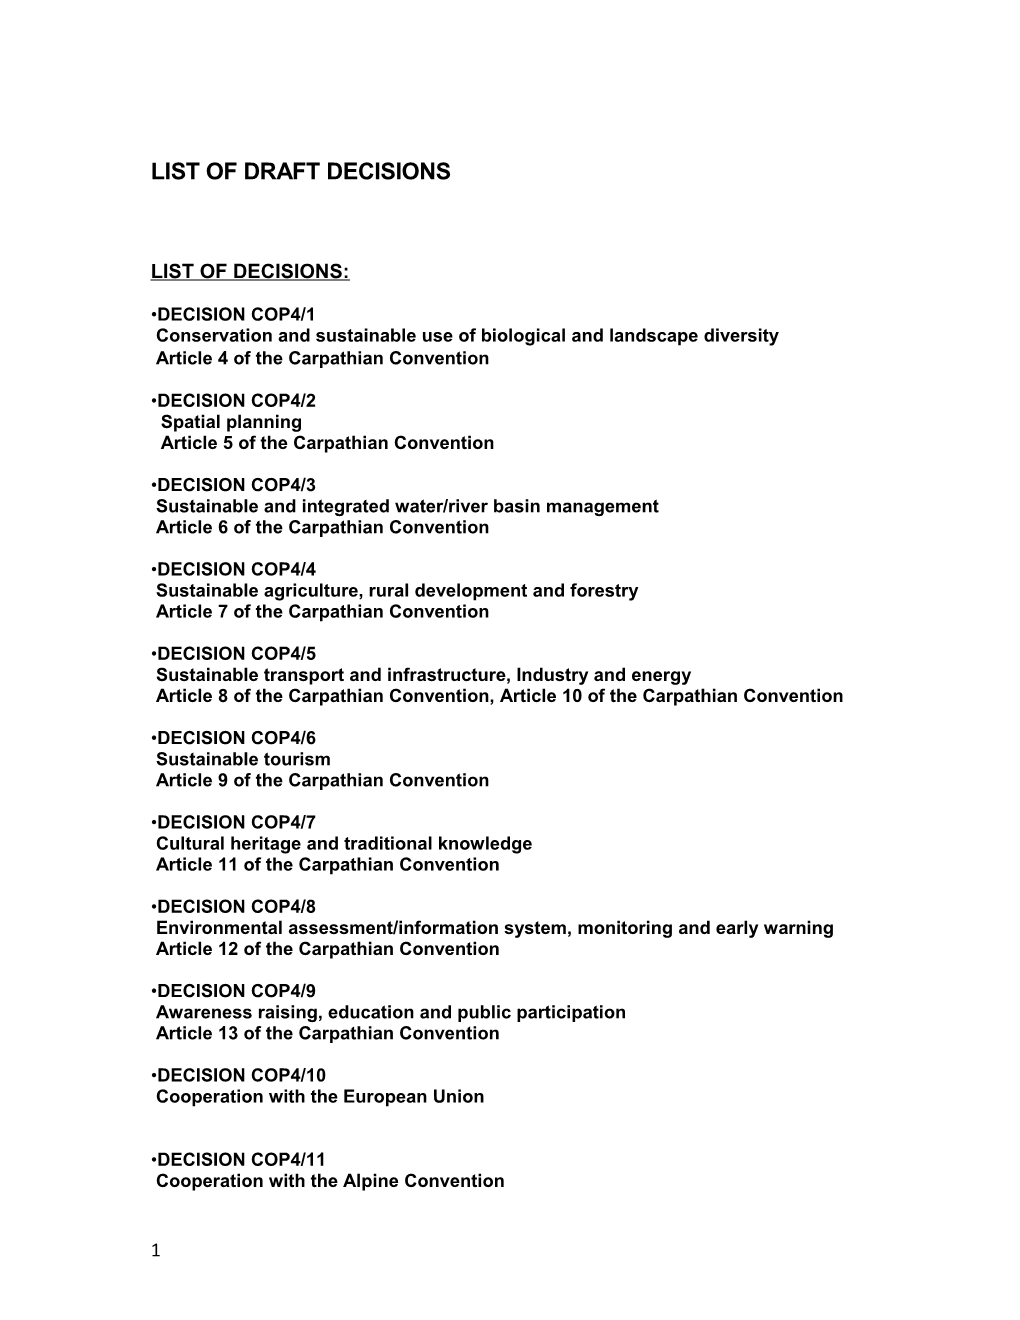 List of Draft Decisions